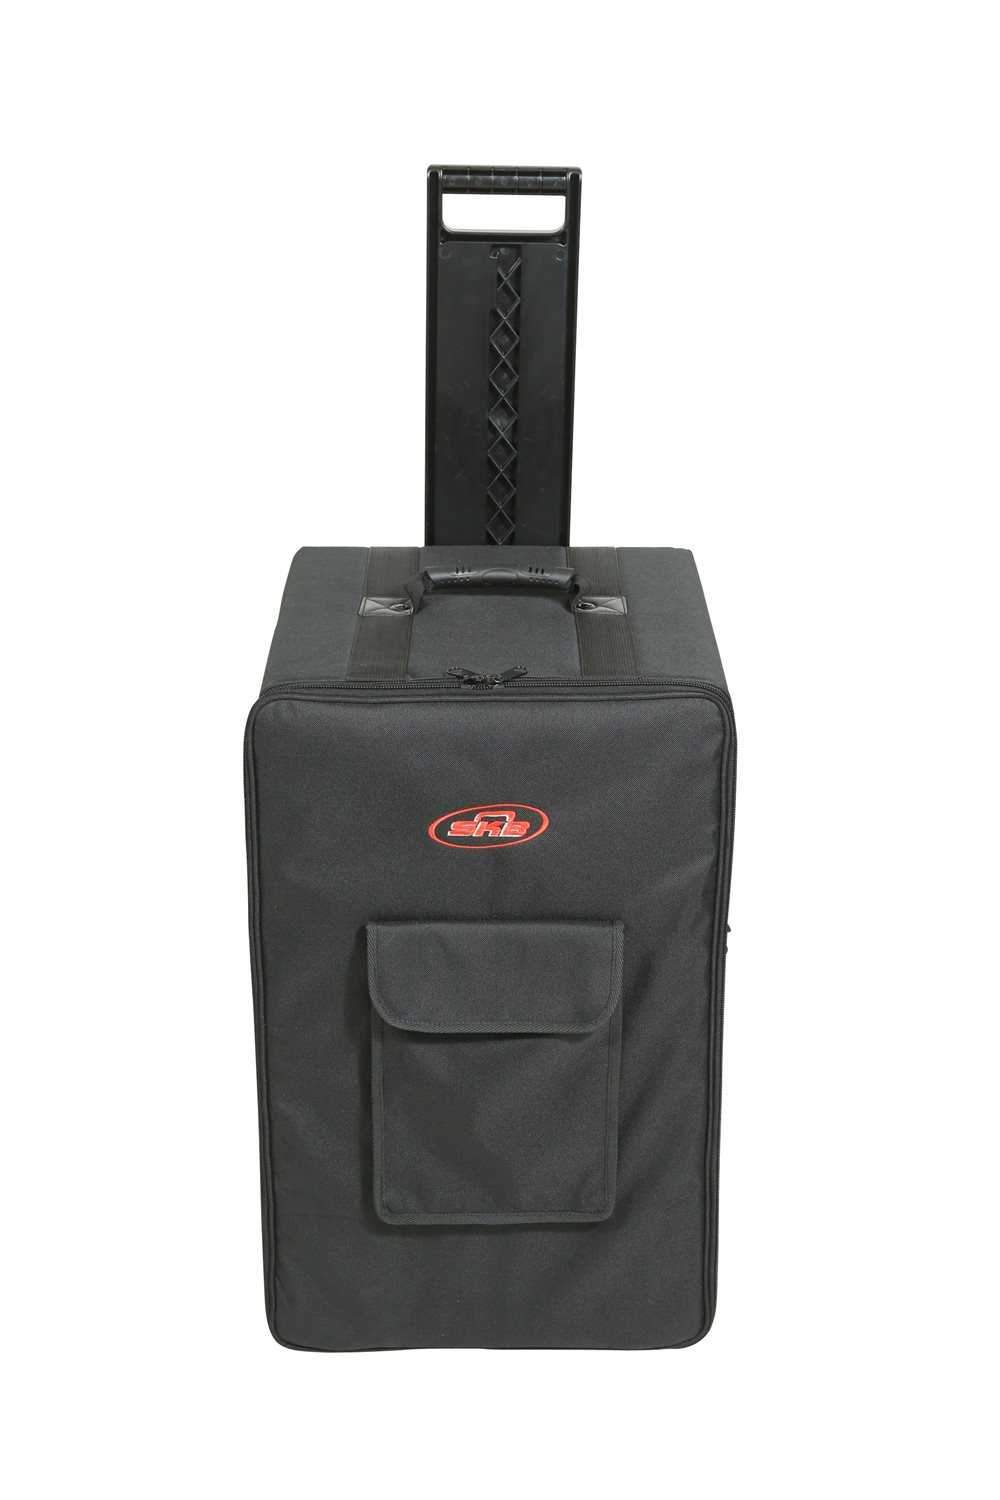 SKB 1SKB-SCPS2 Rolling 12" Powered Speaker Case - PSSL ProSound and Stage Lighting